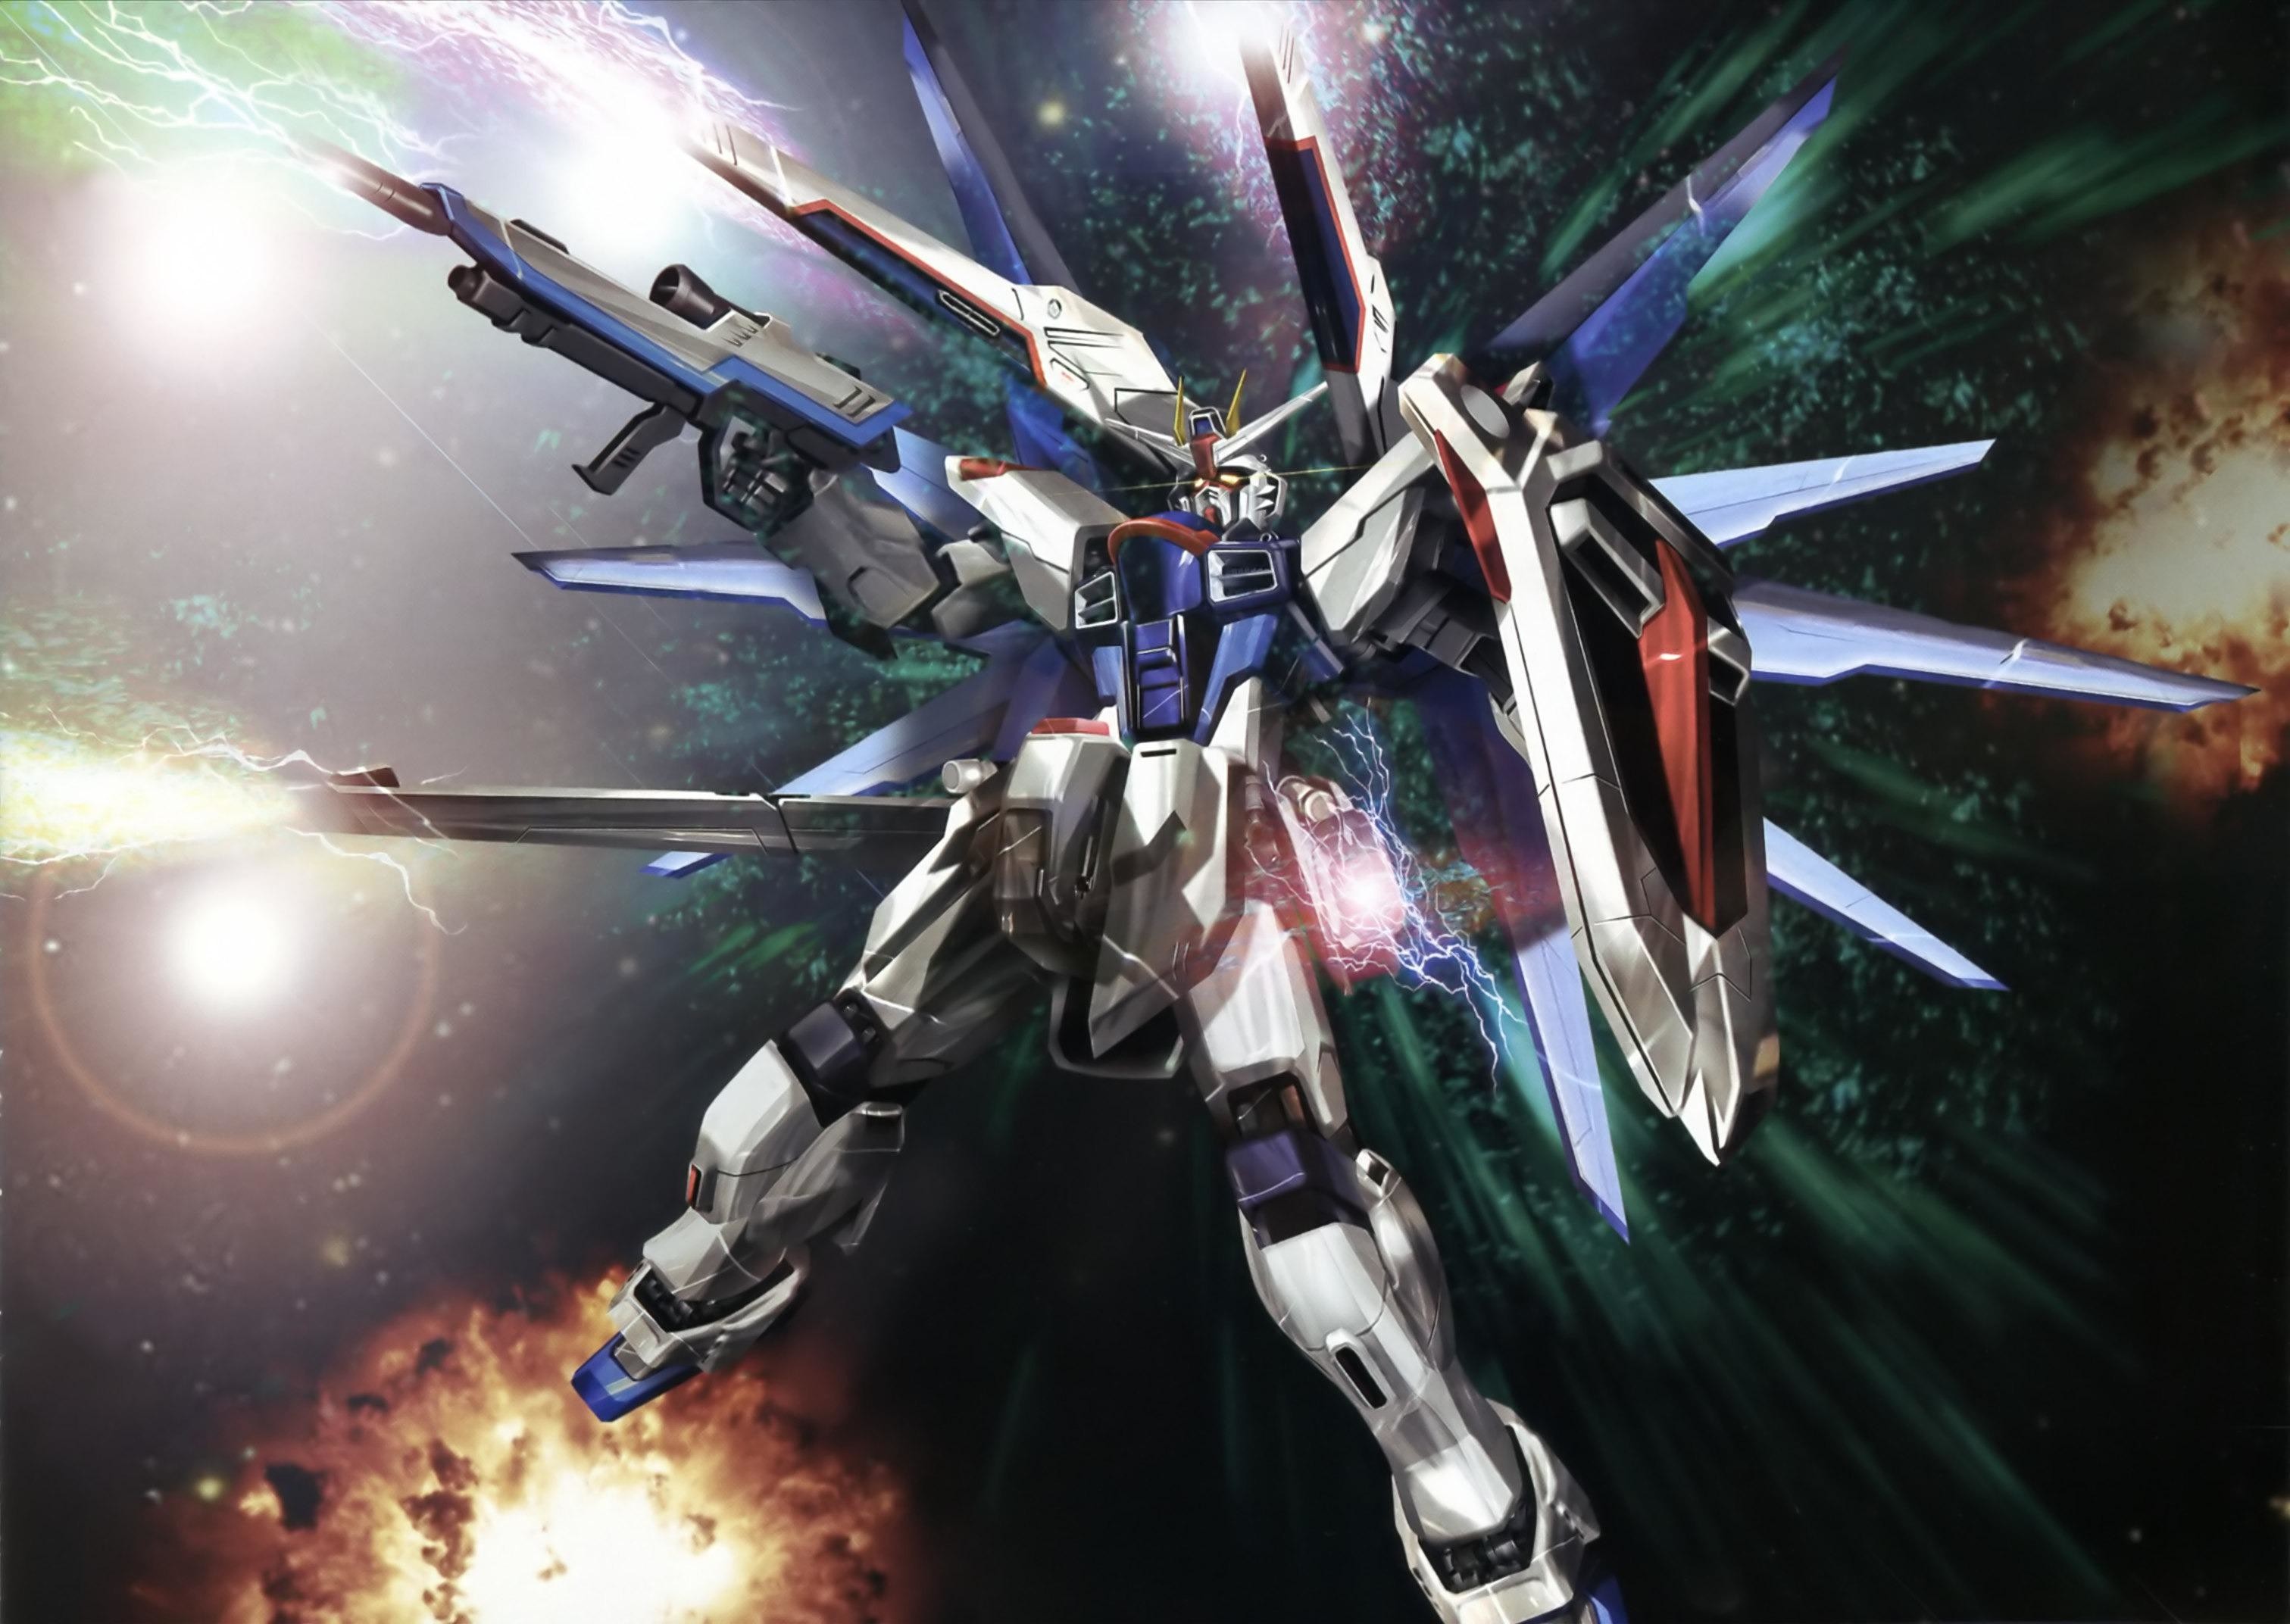 3023x2144 Post your favourite Gundam Wallpapers (image warning) - Anime and Manga -  Gundam Message Board - GameFAQs